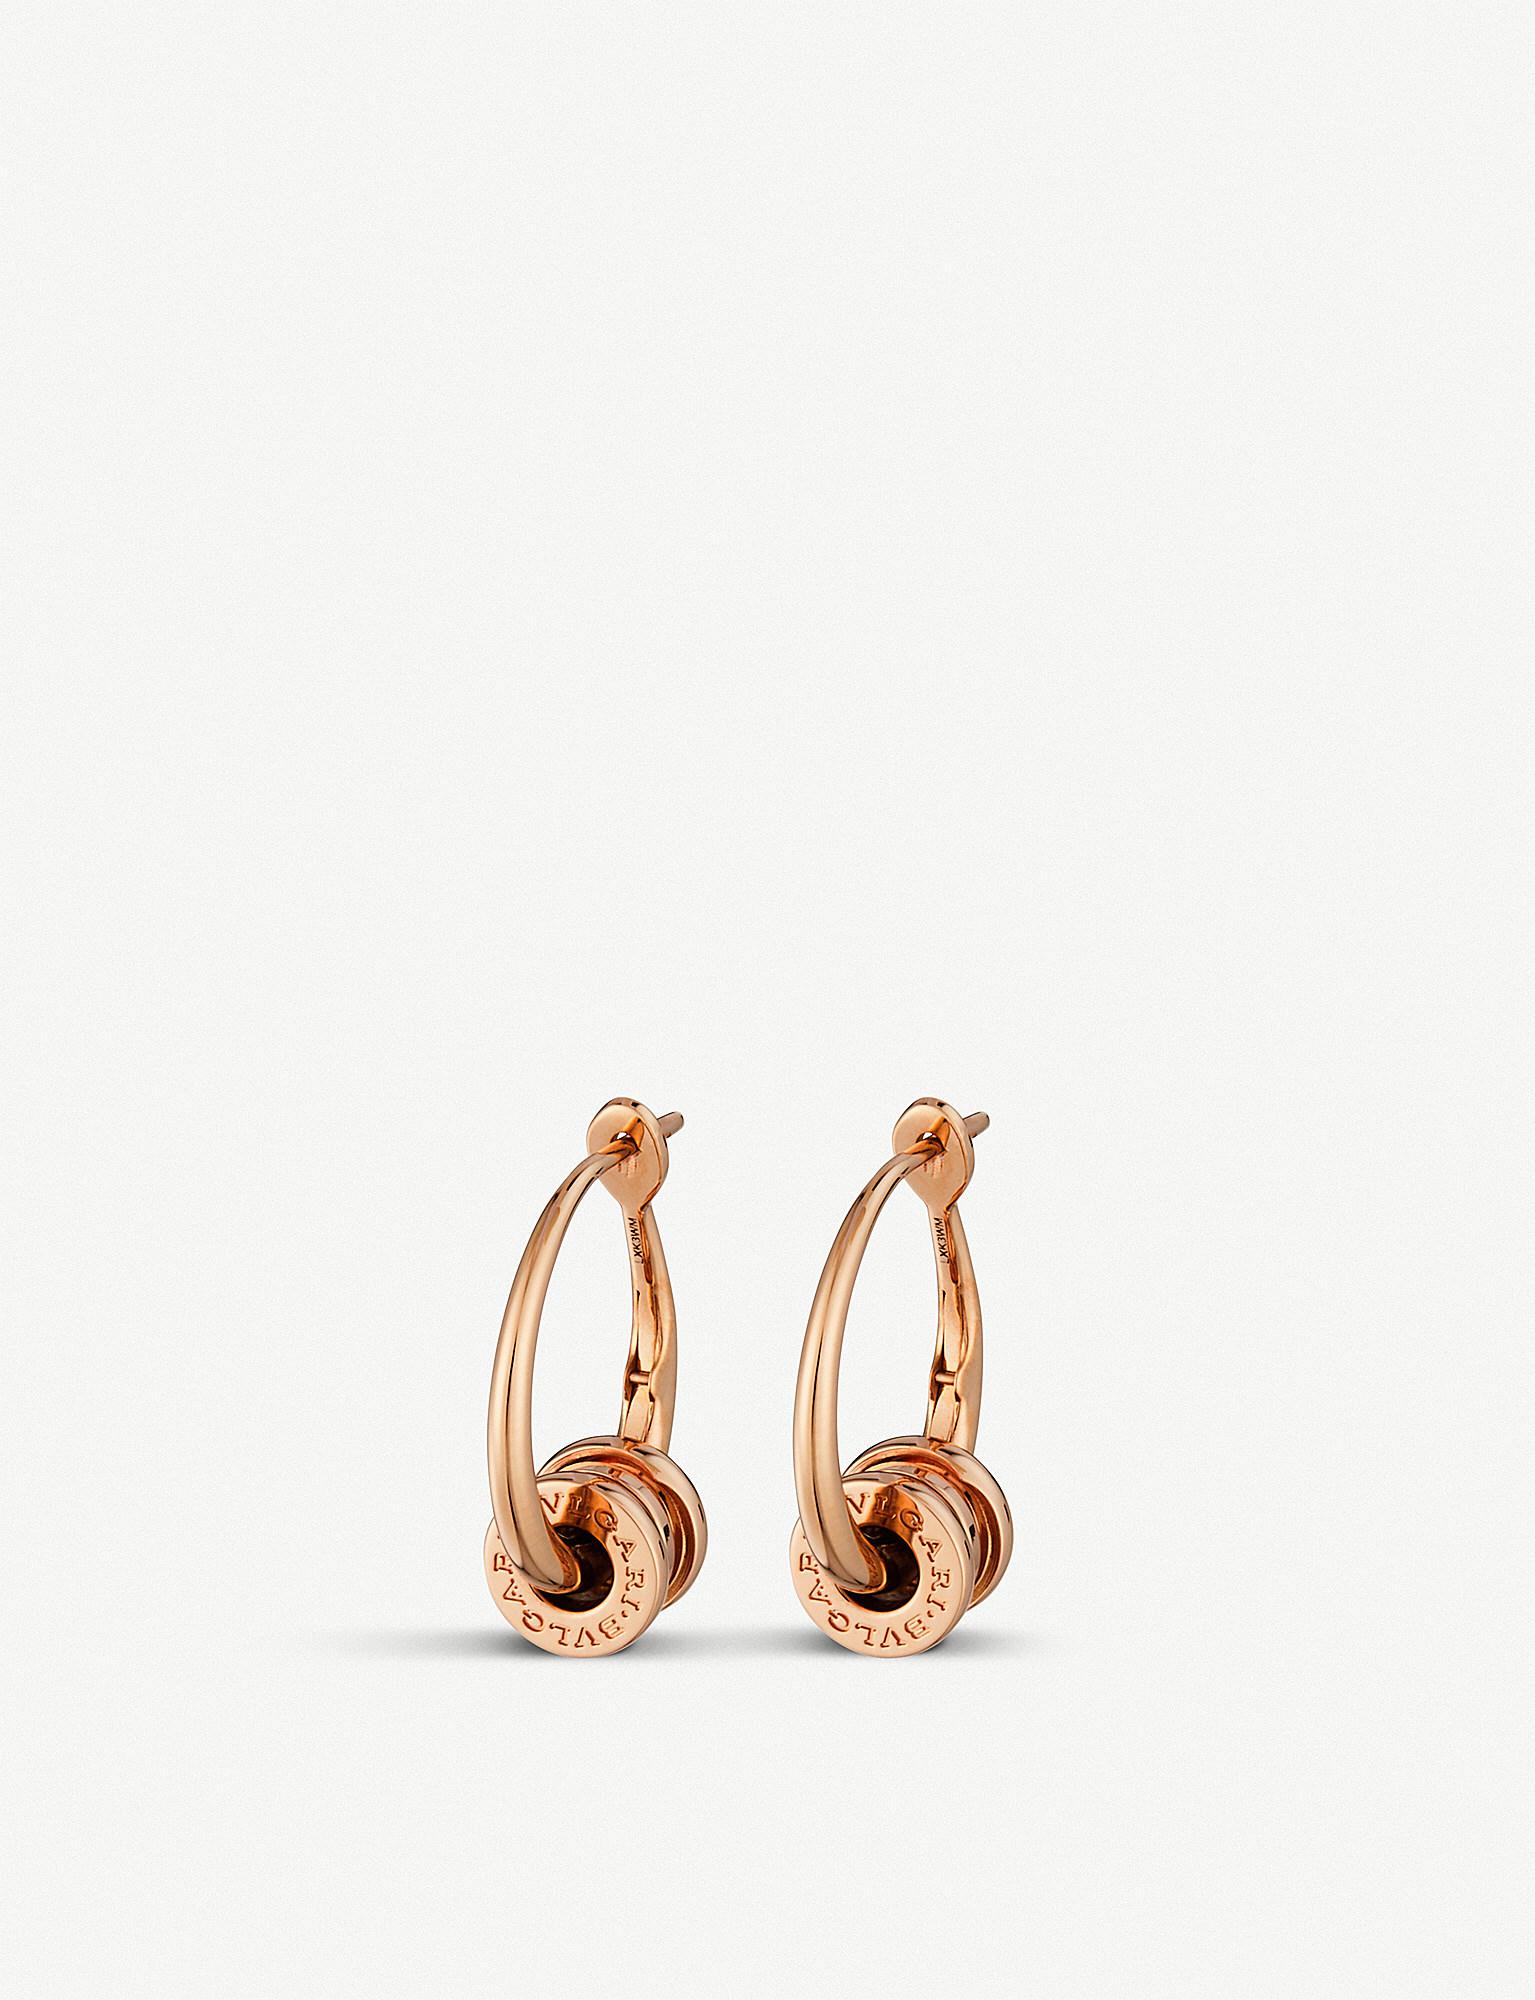 bvlgari earrings cheapest